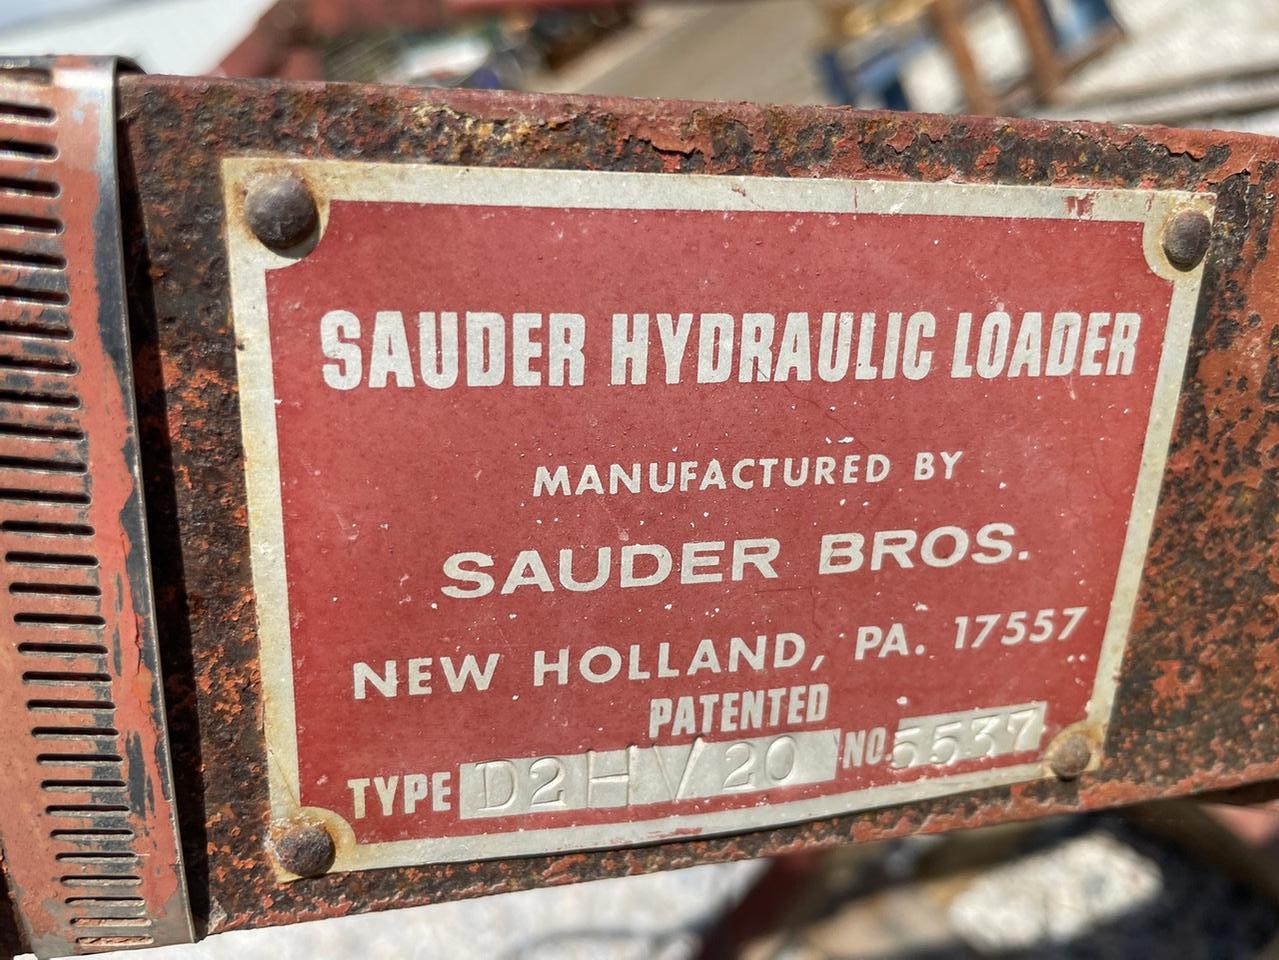 Sauder Hydraulic Loader